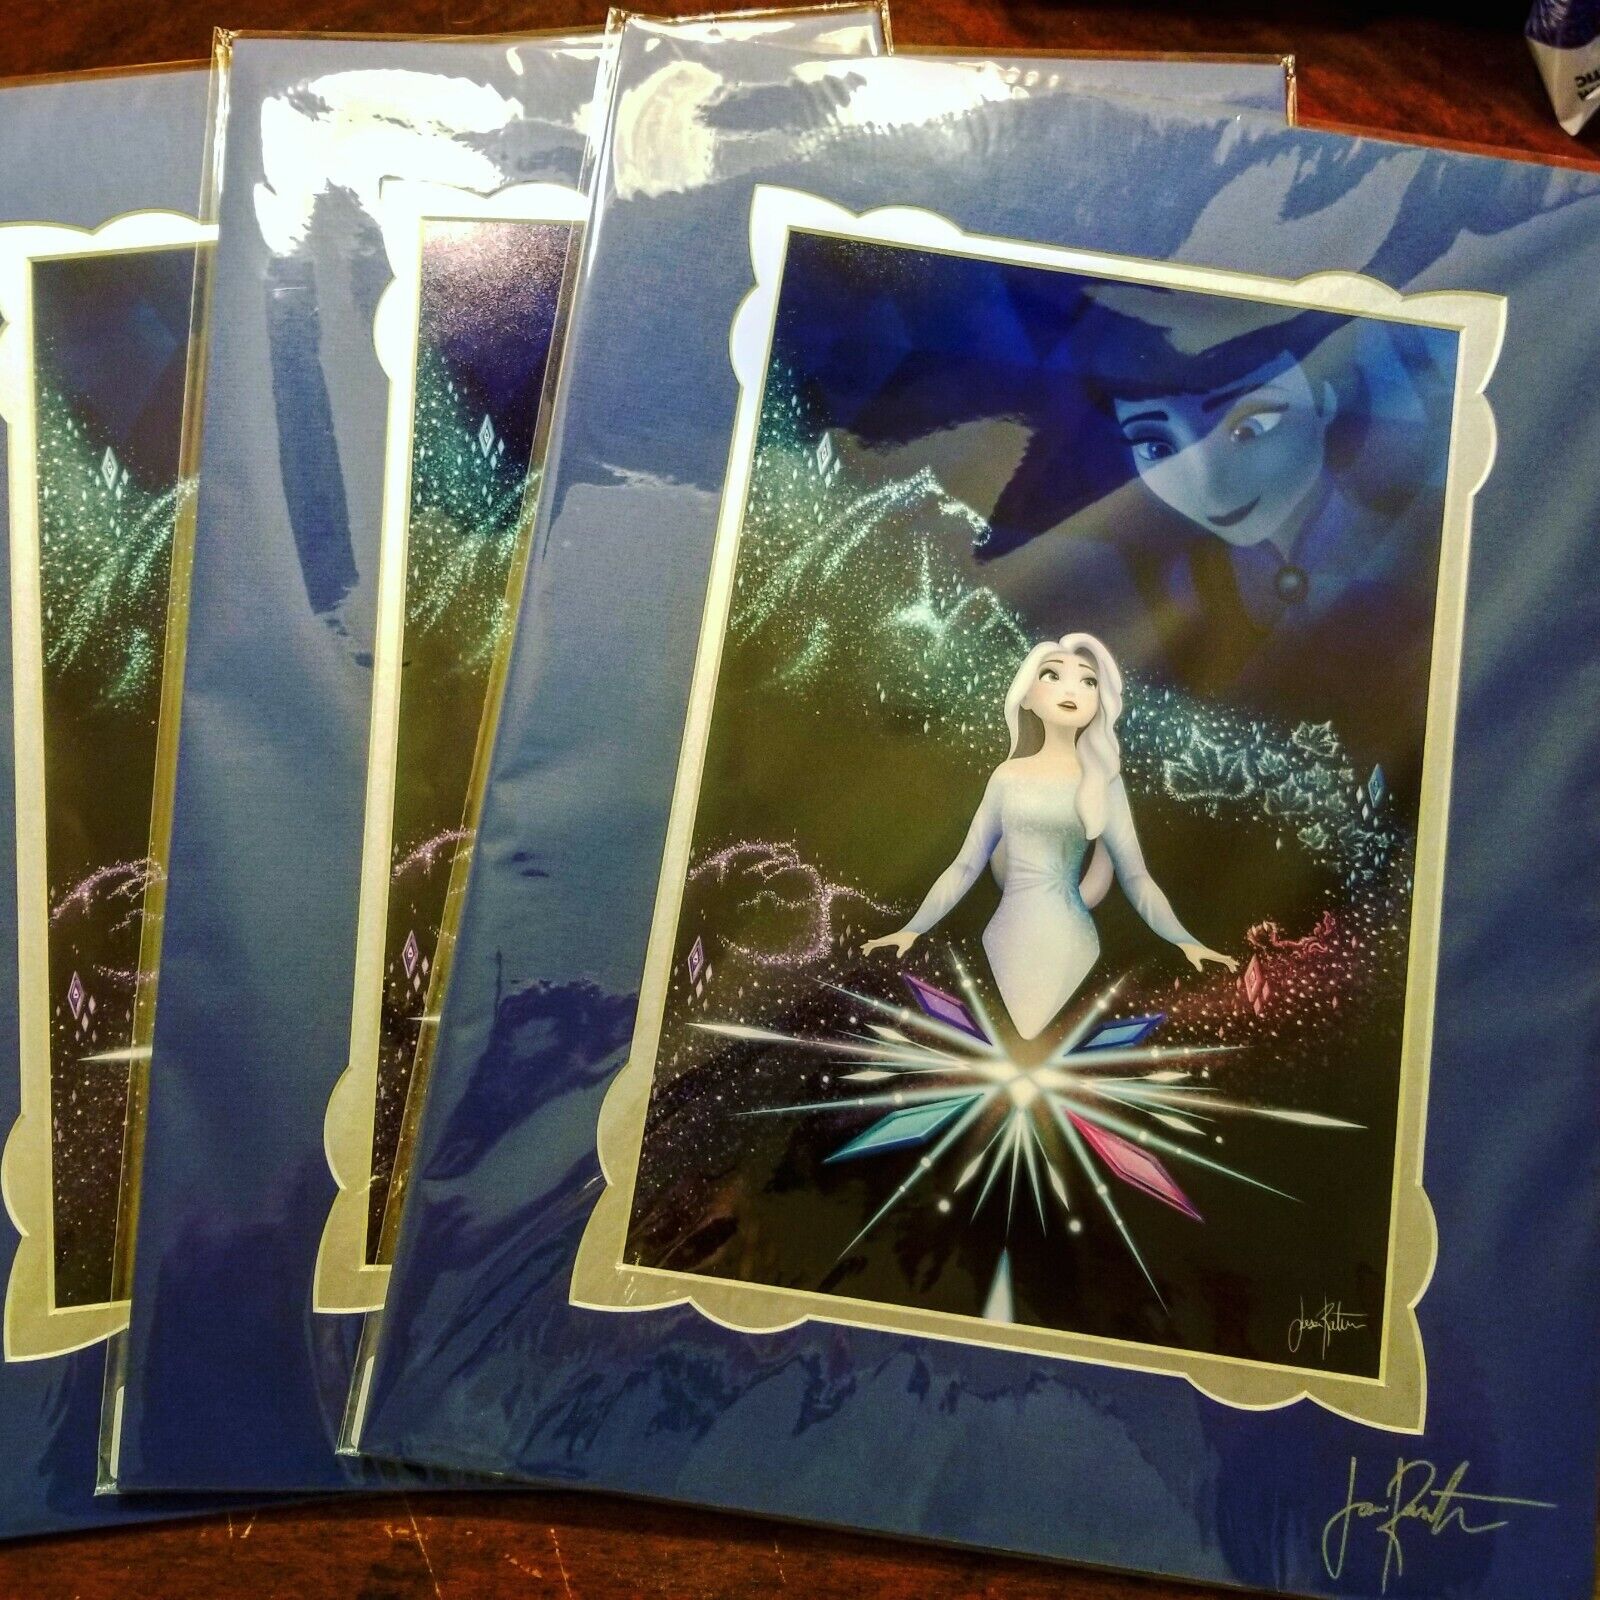 Disney Exclusive Limited Ed Print Frozen Queen Elsa Signed By Artist J Ratner...